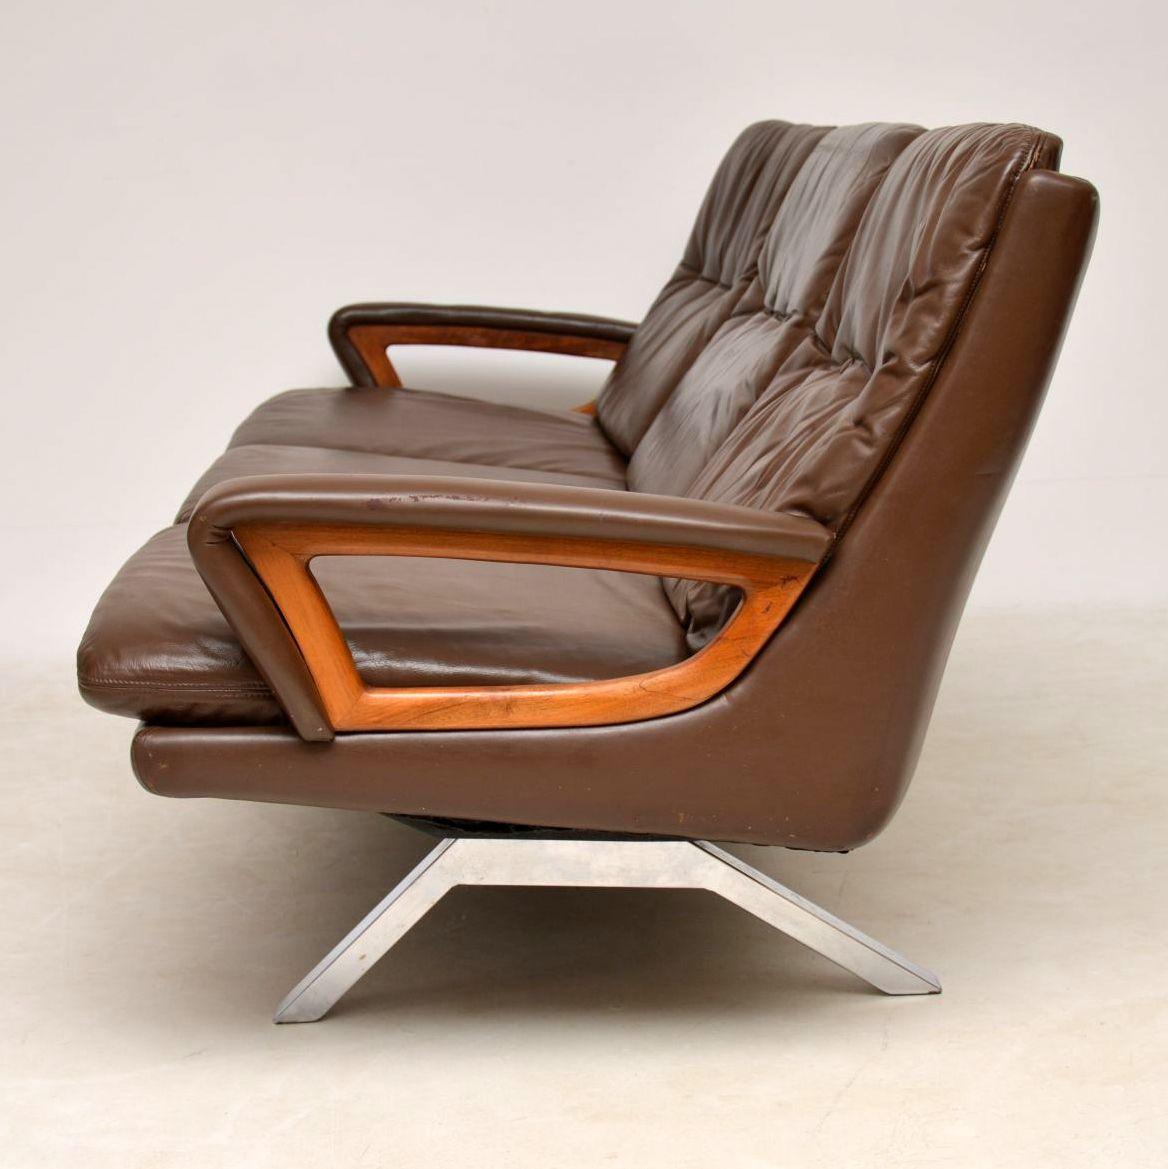 Mid-20th Century 1960s Danish Vintage Leather Teak and Chrome Sofa